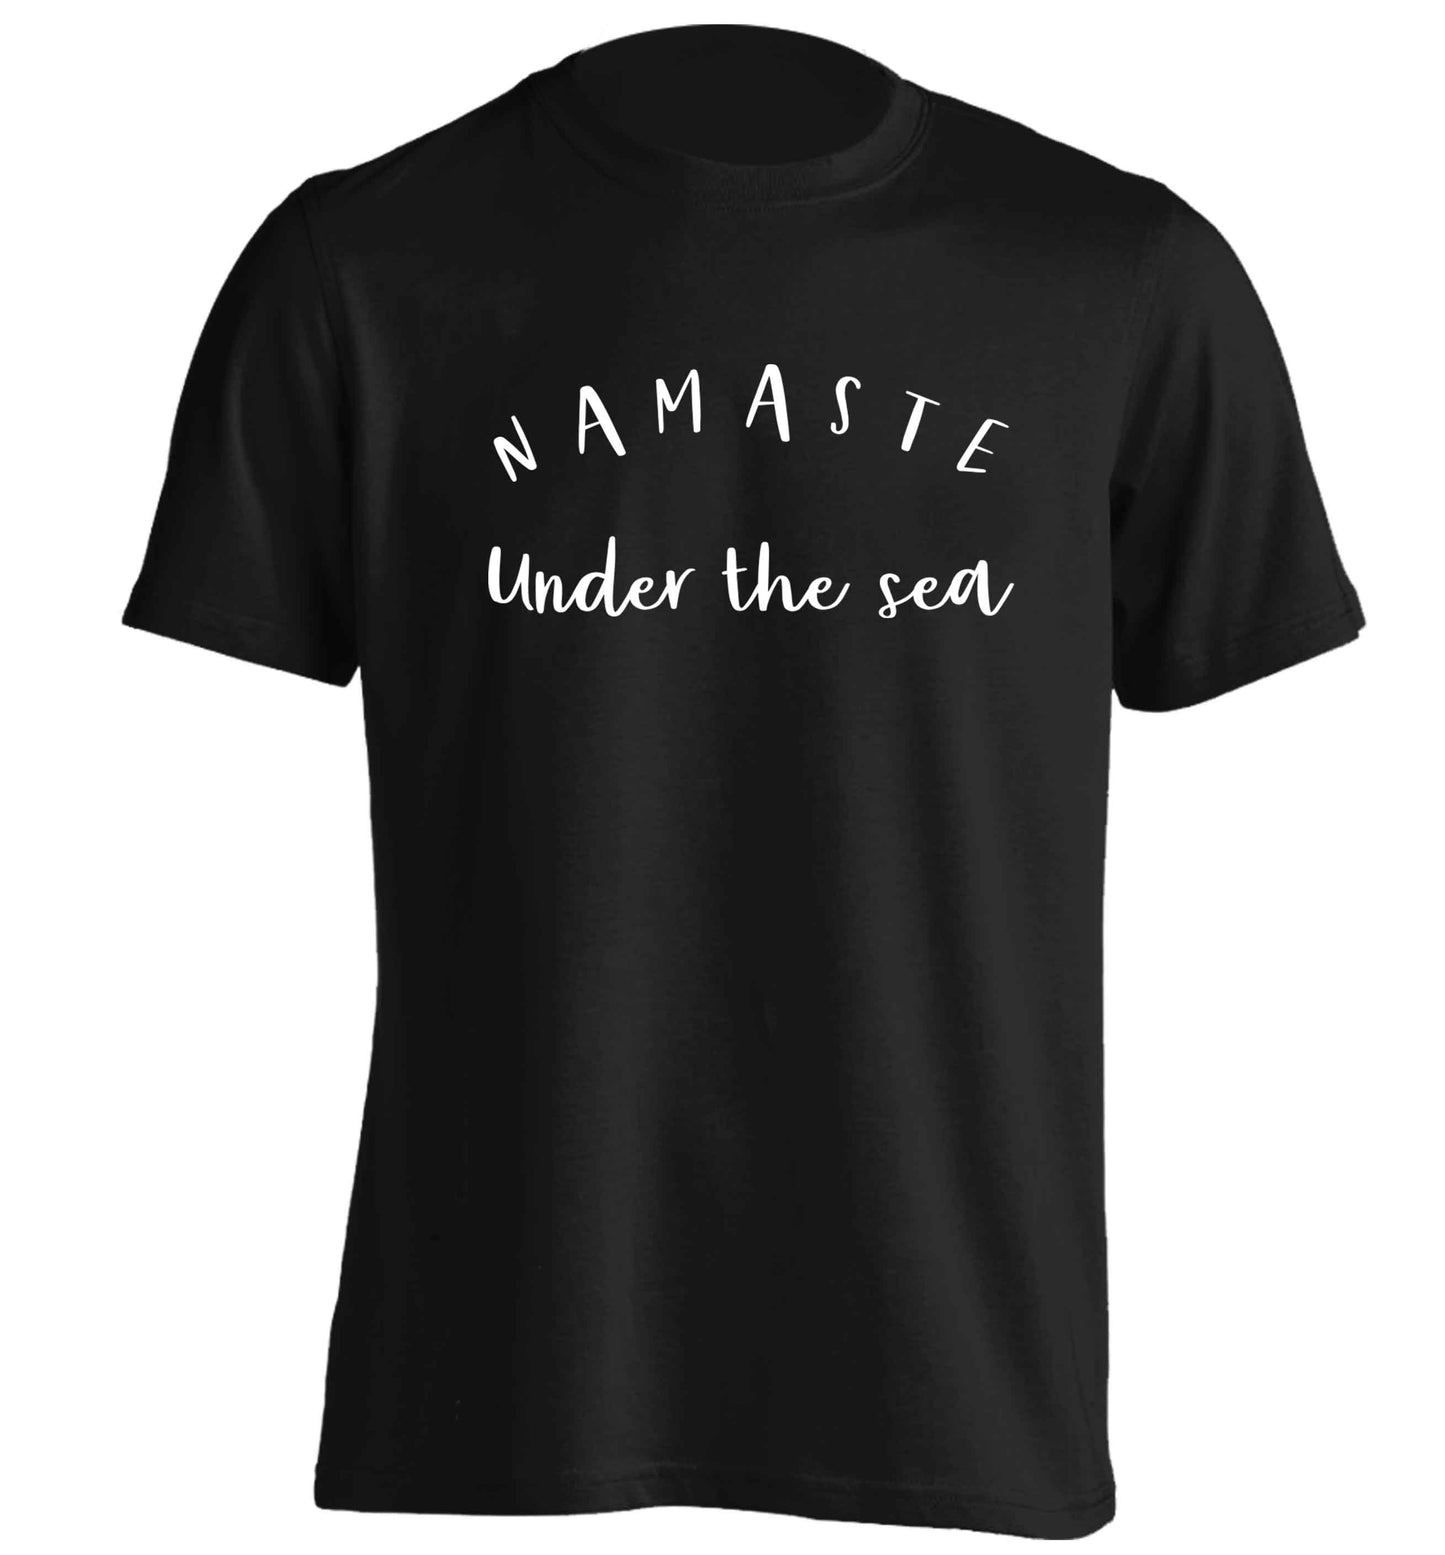 Namaste under the water adults unisex black Tshirt 2XL